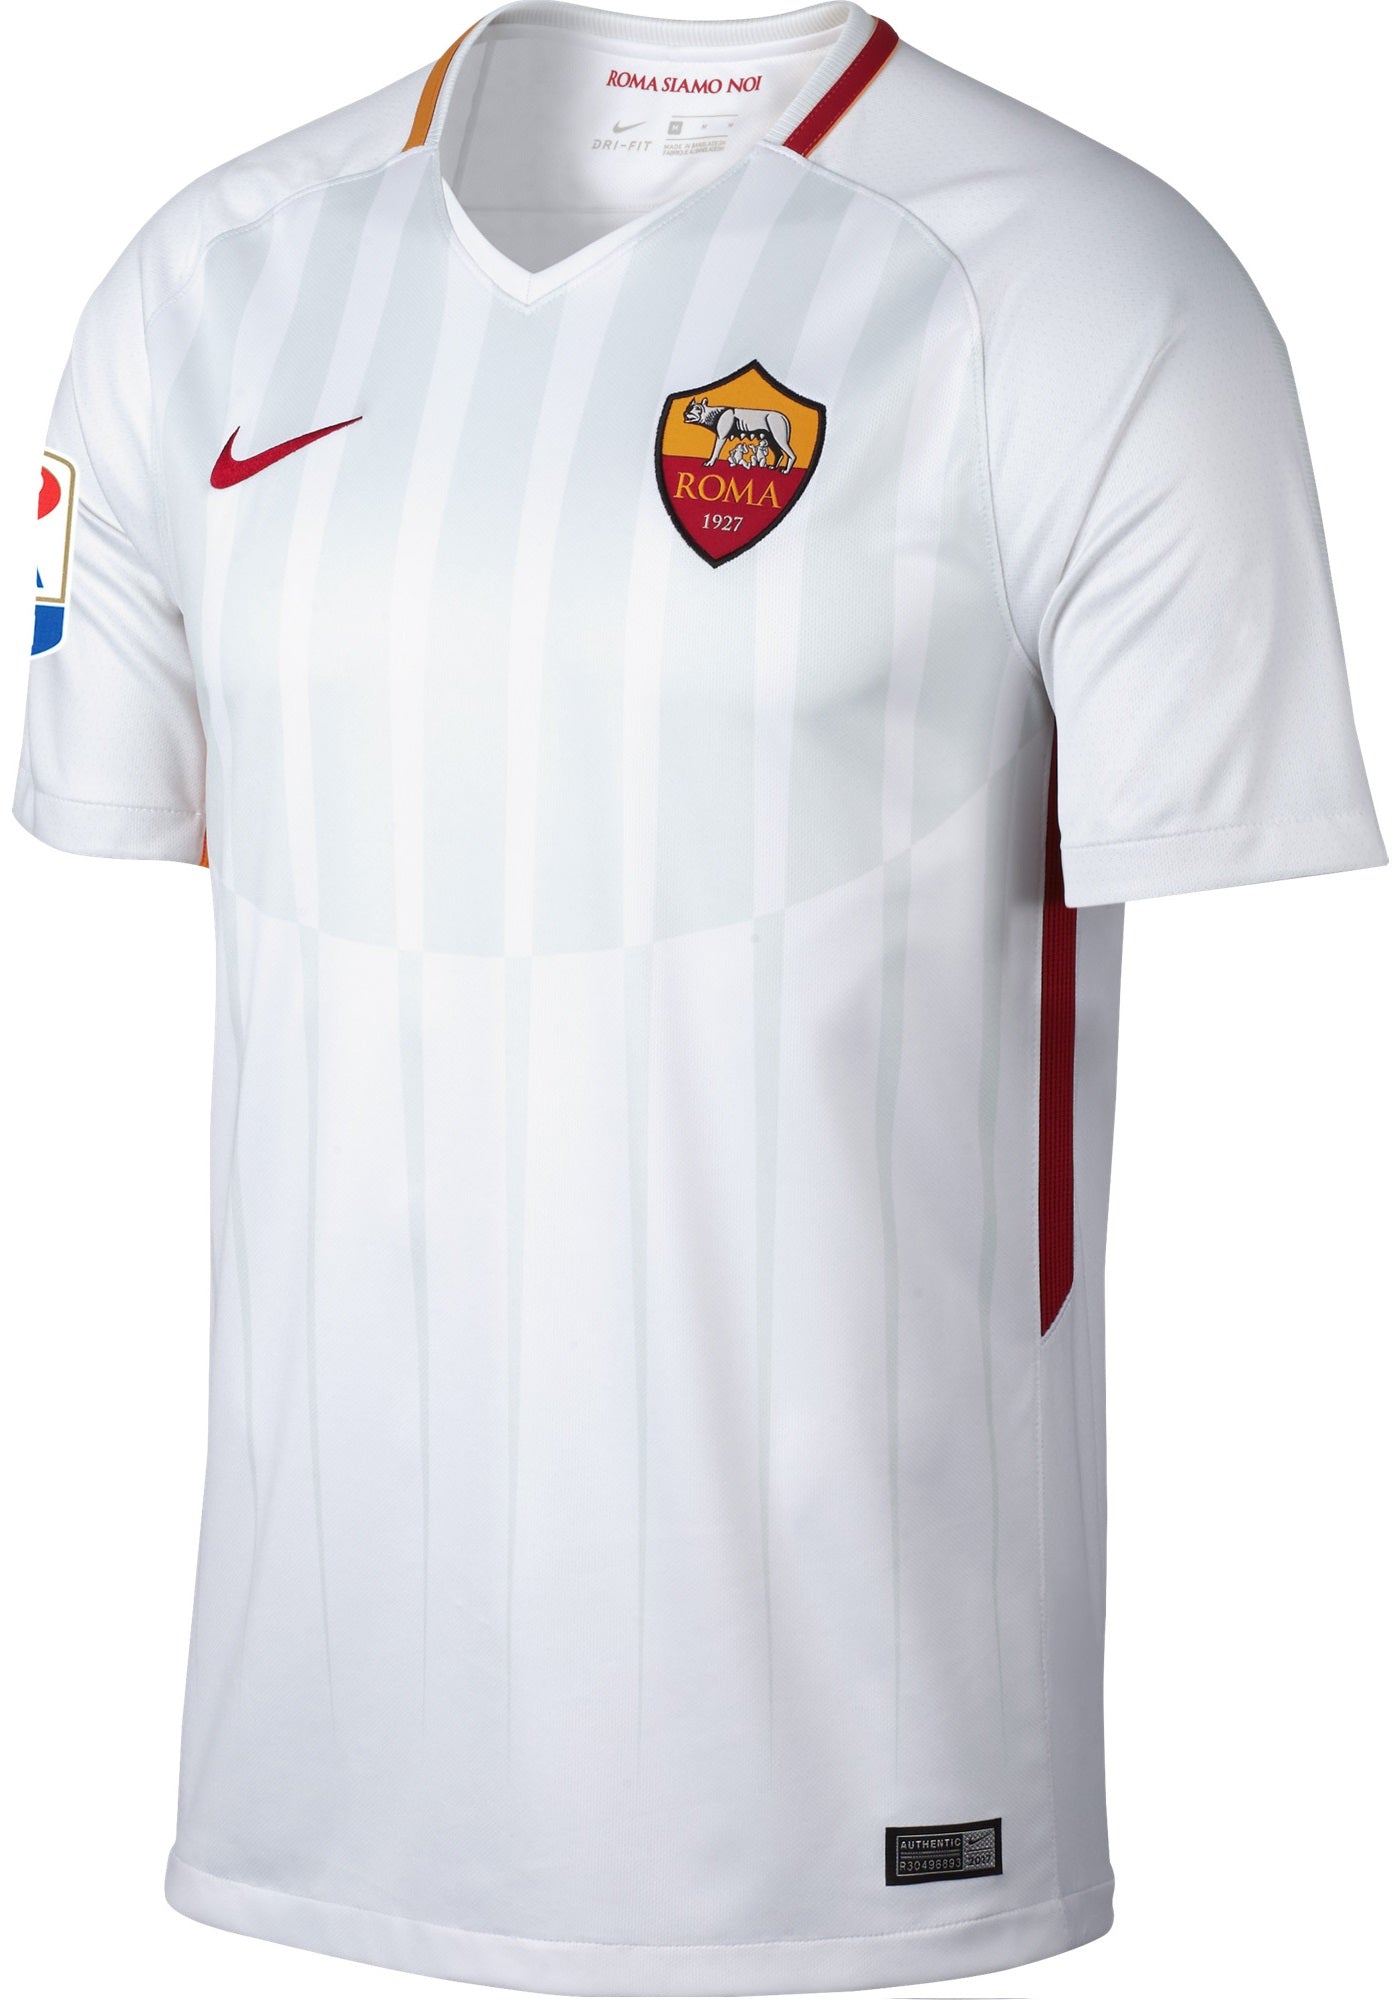 NIKE 847283-100 AS Roma Football Soccer Away Shirt 2017-18